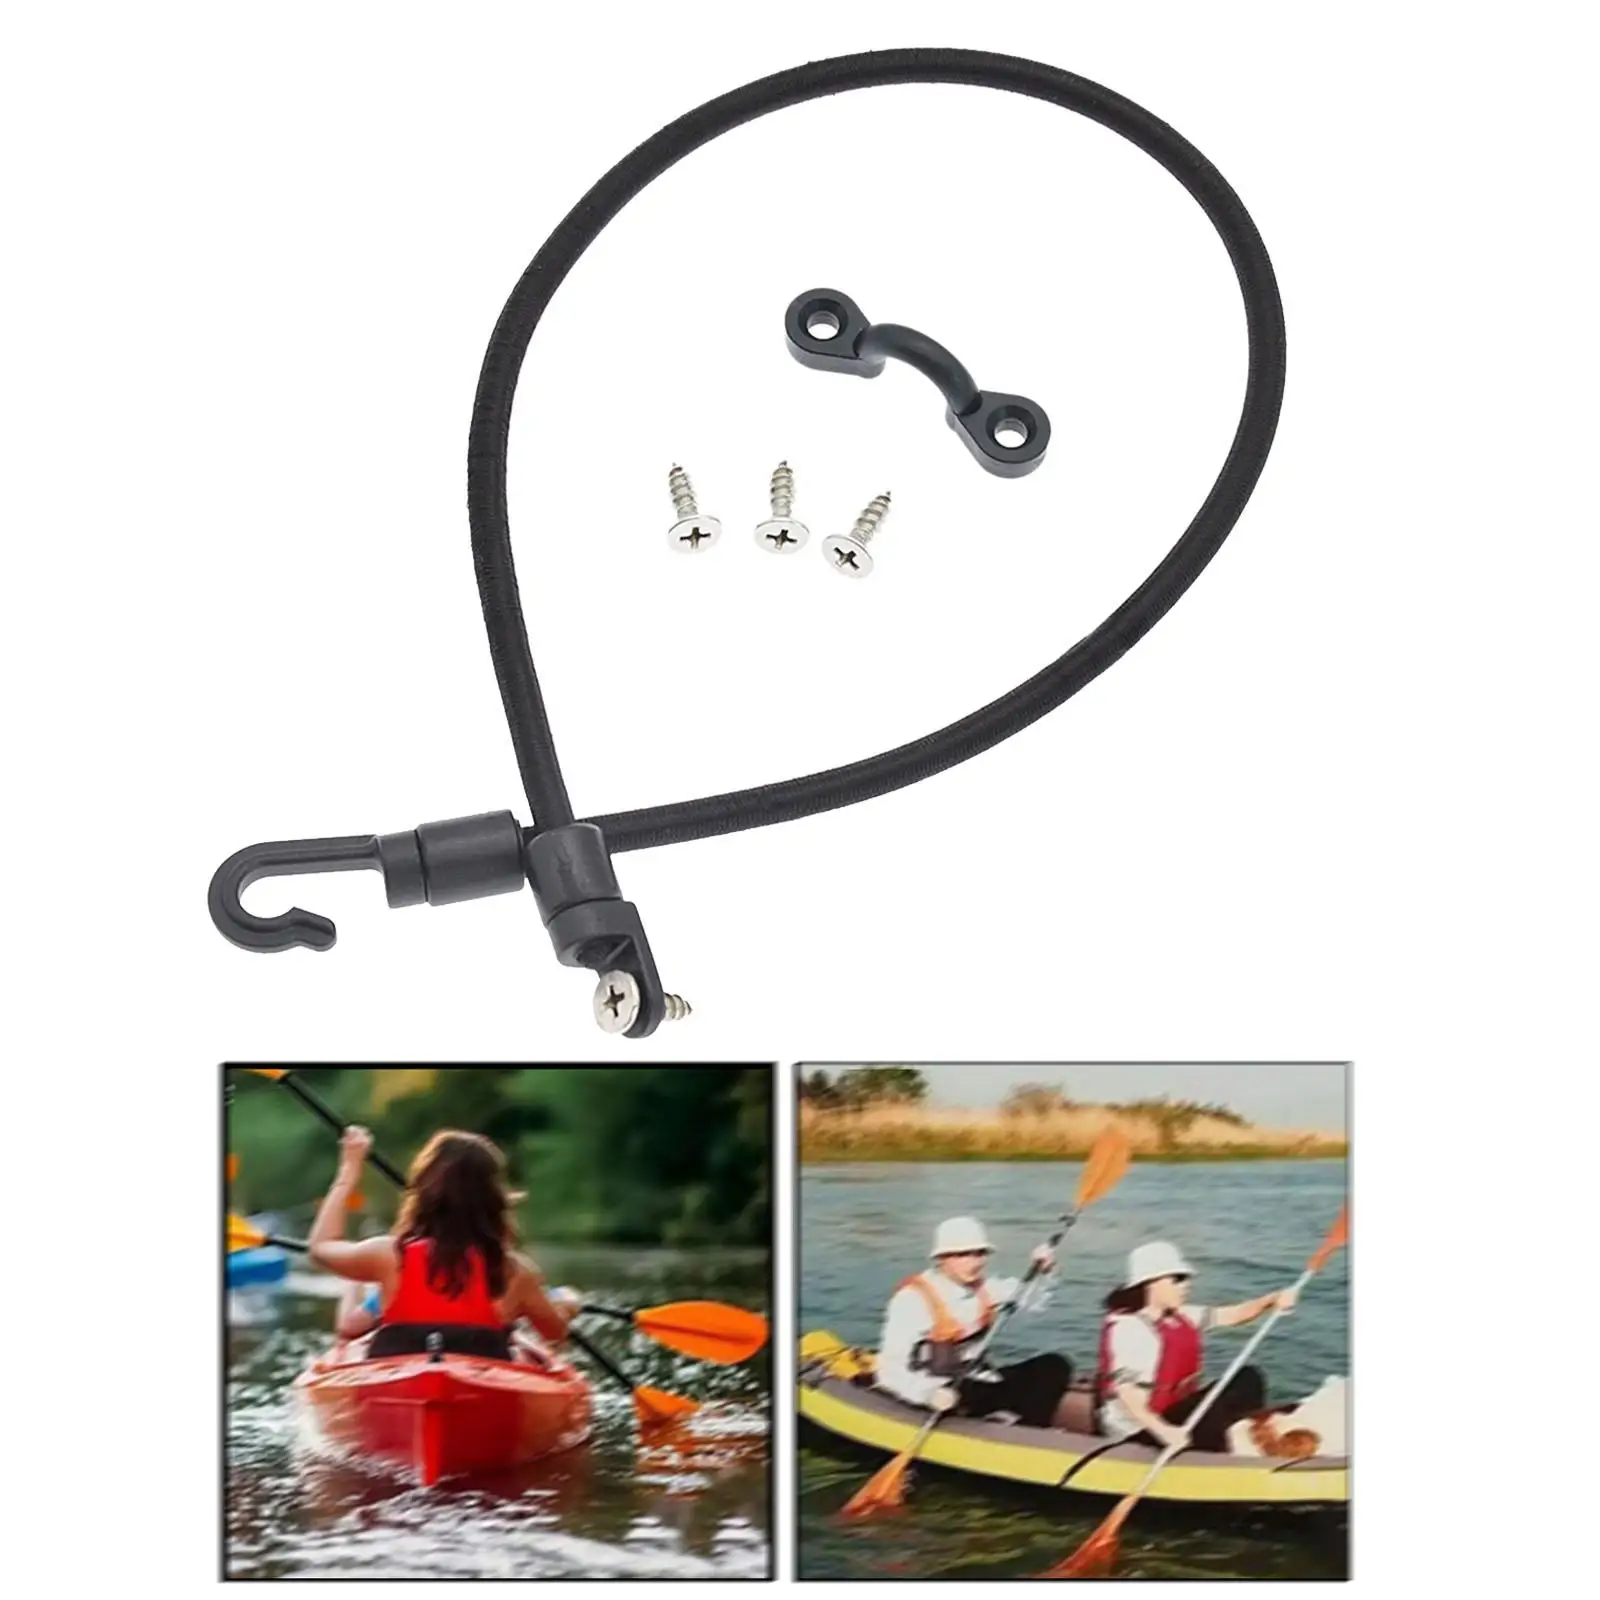 Fishing rods tamer Durable Kayak Deck Rigging Set for Kayak Boat Fitments